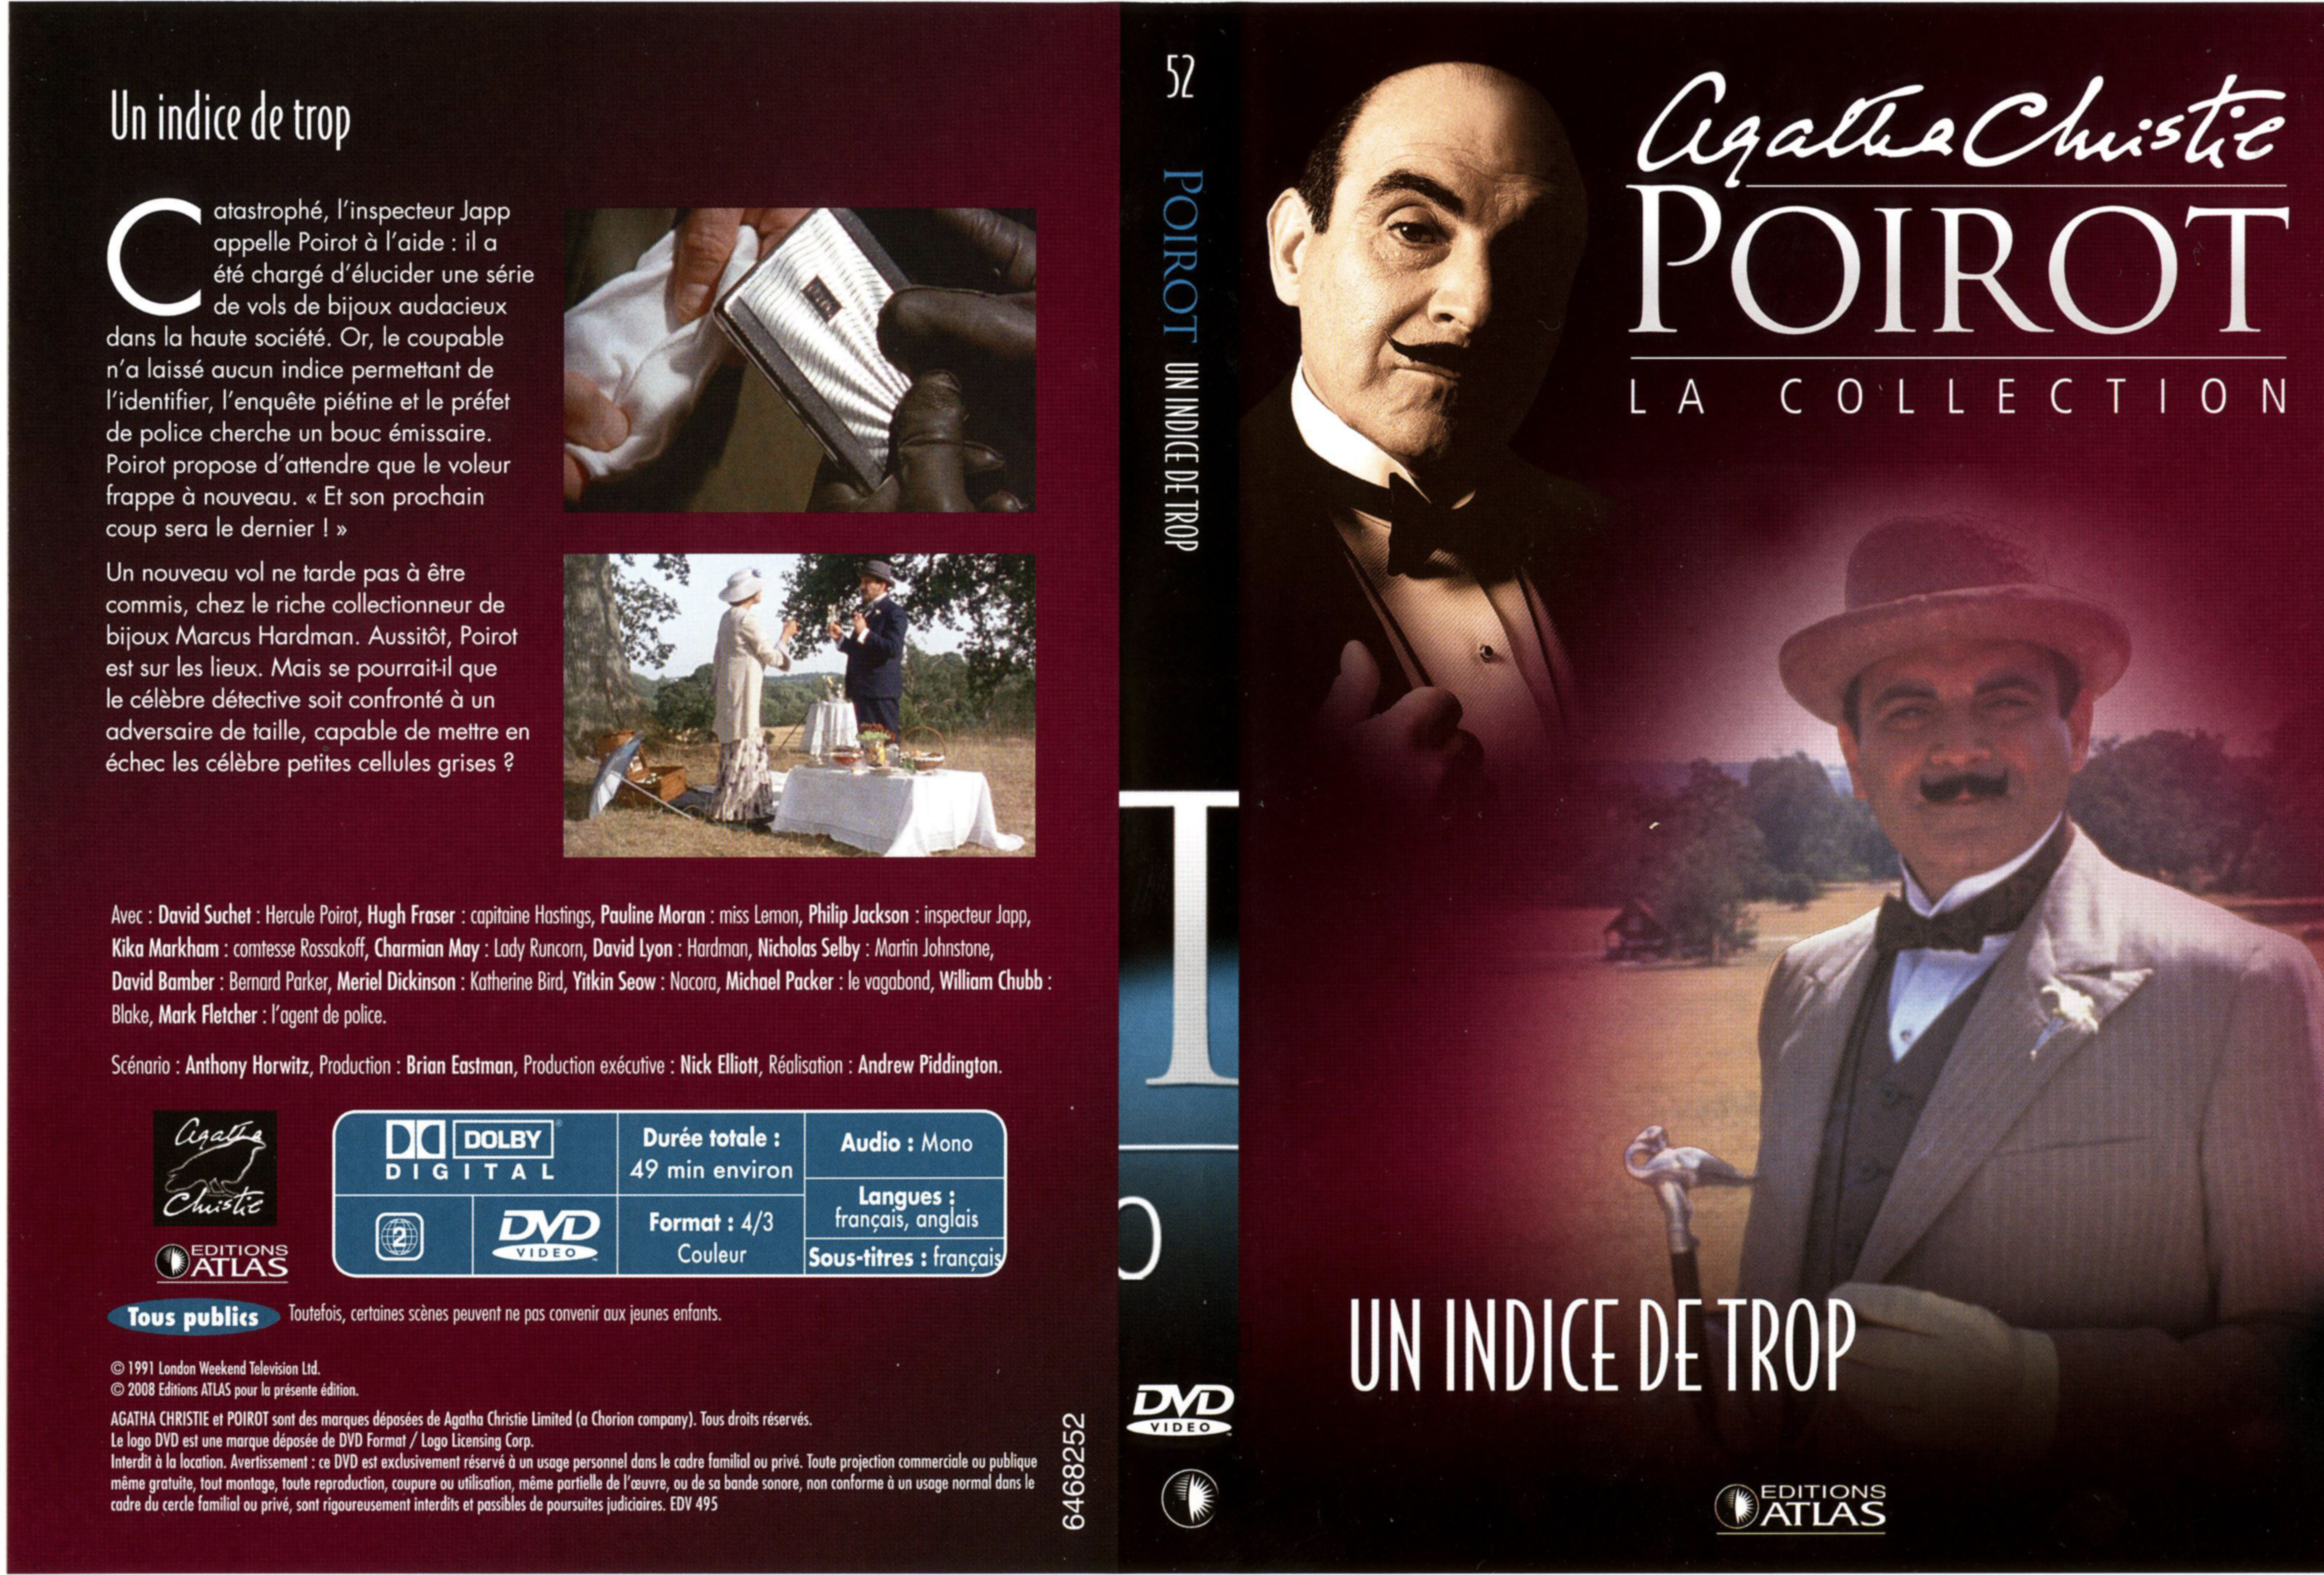 Jaquette DVD Hercule Poirot vol 52